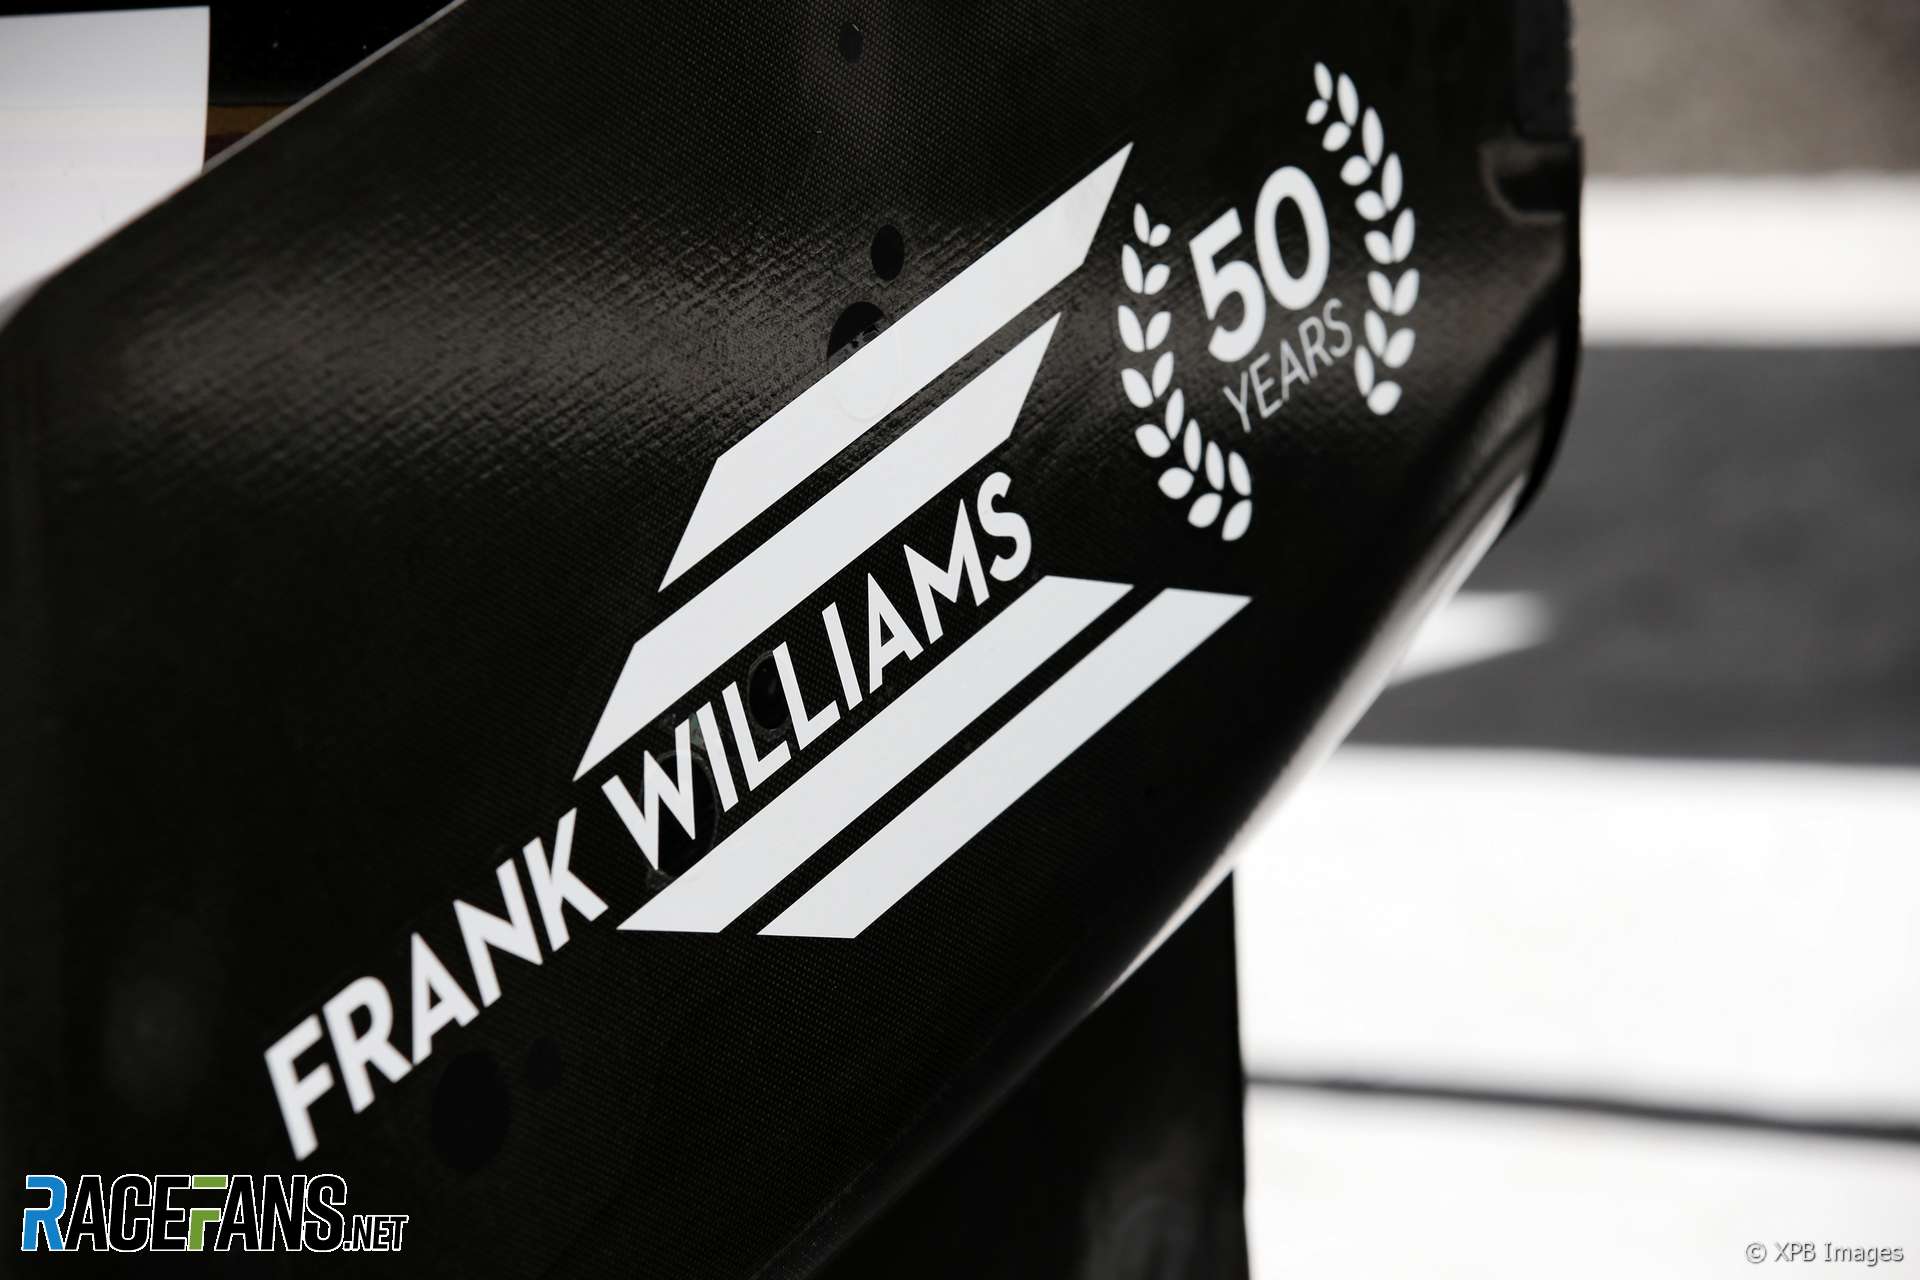 Frank Williams logo, Silverstone, 2019